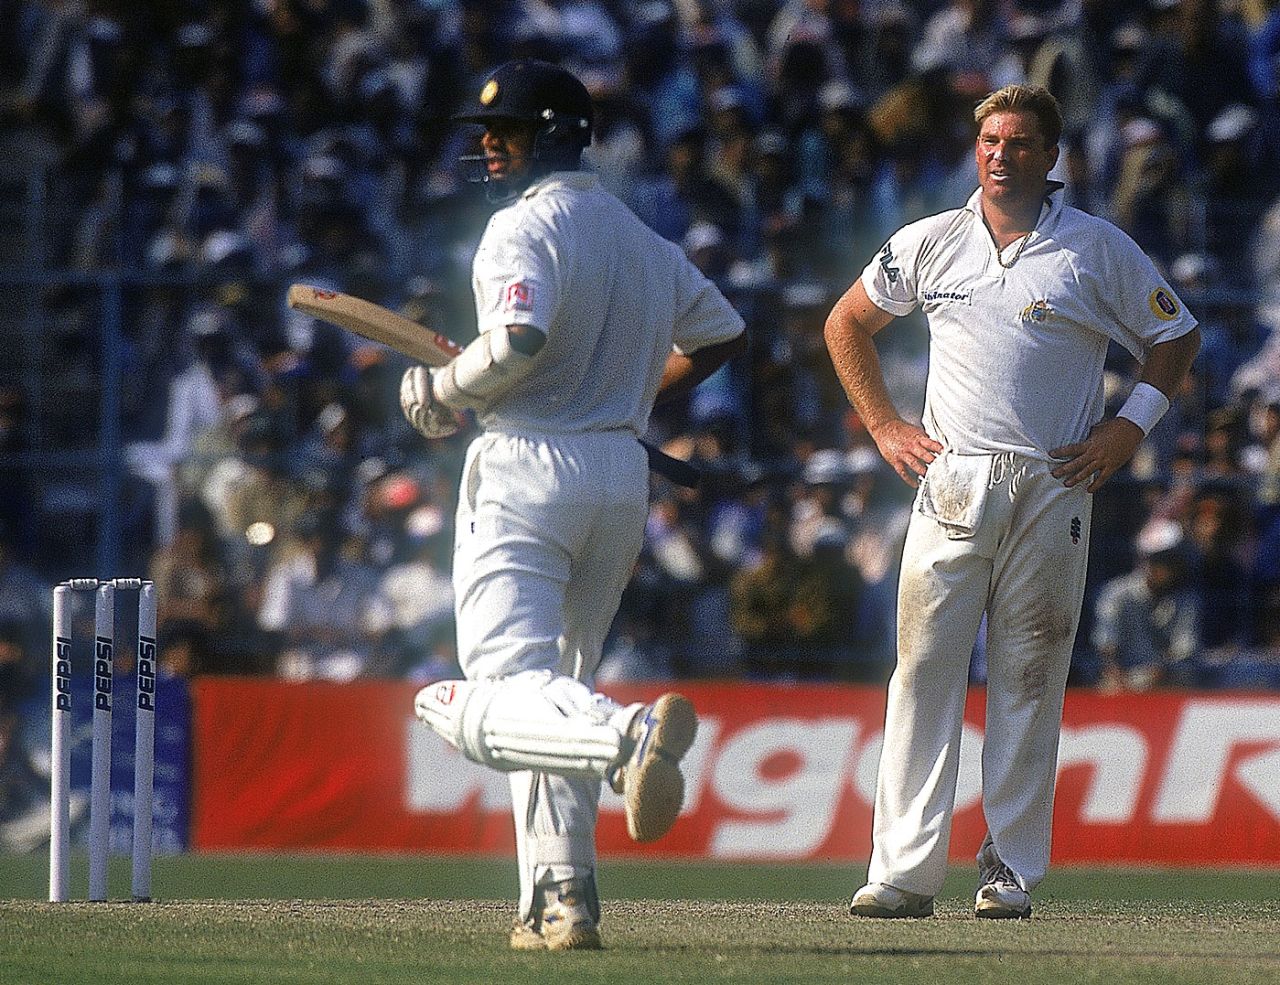 Shane Warne looks on helpless as Rahul Dravid takes a run, India v Australia, 2nd Test, Kolkata, 3rd day, March 13, 2001